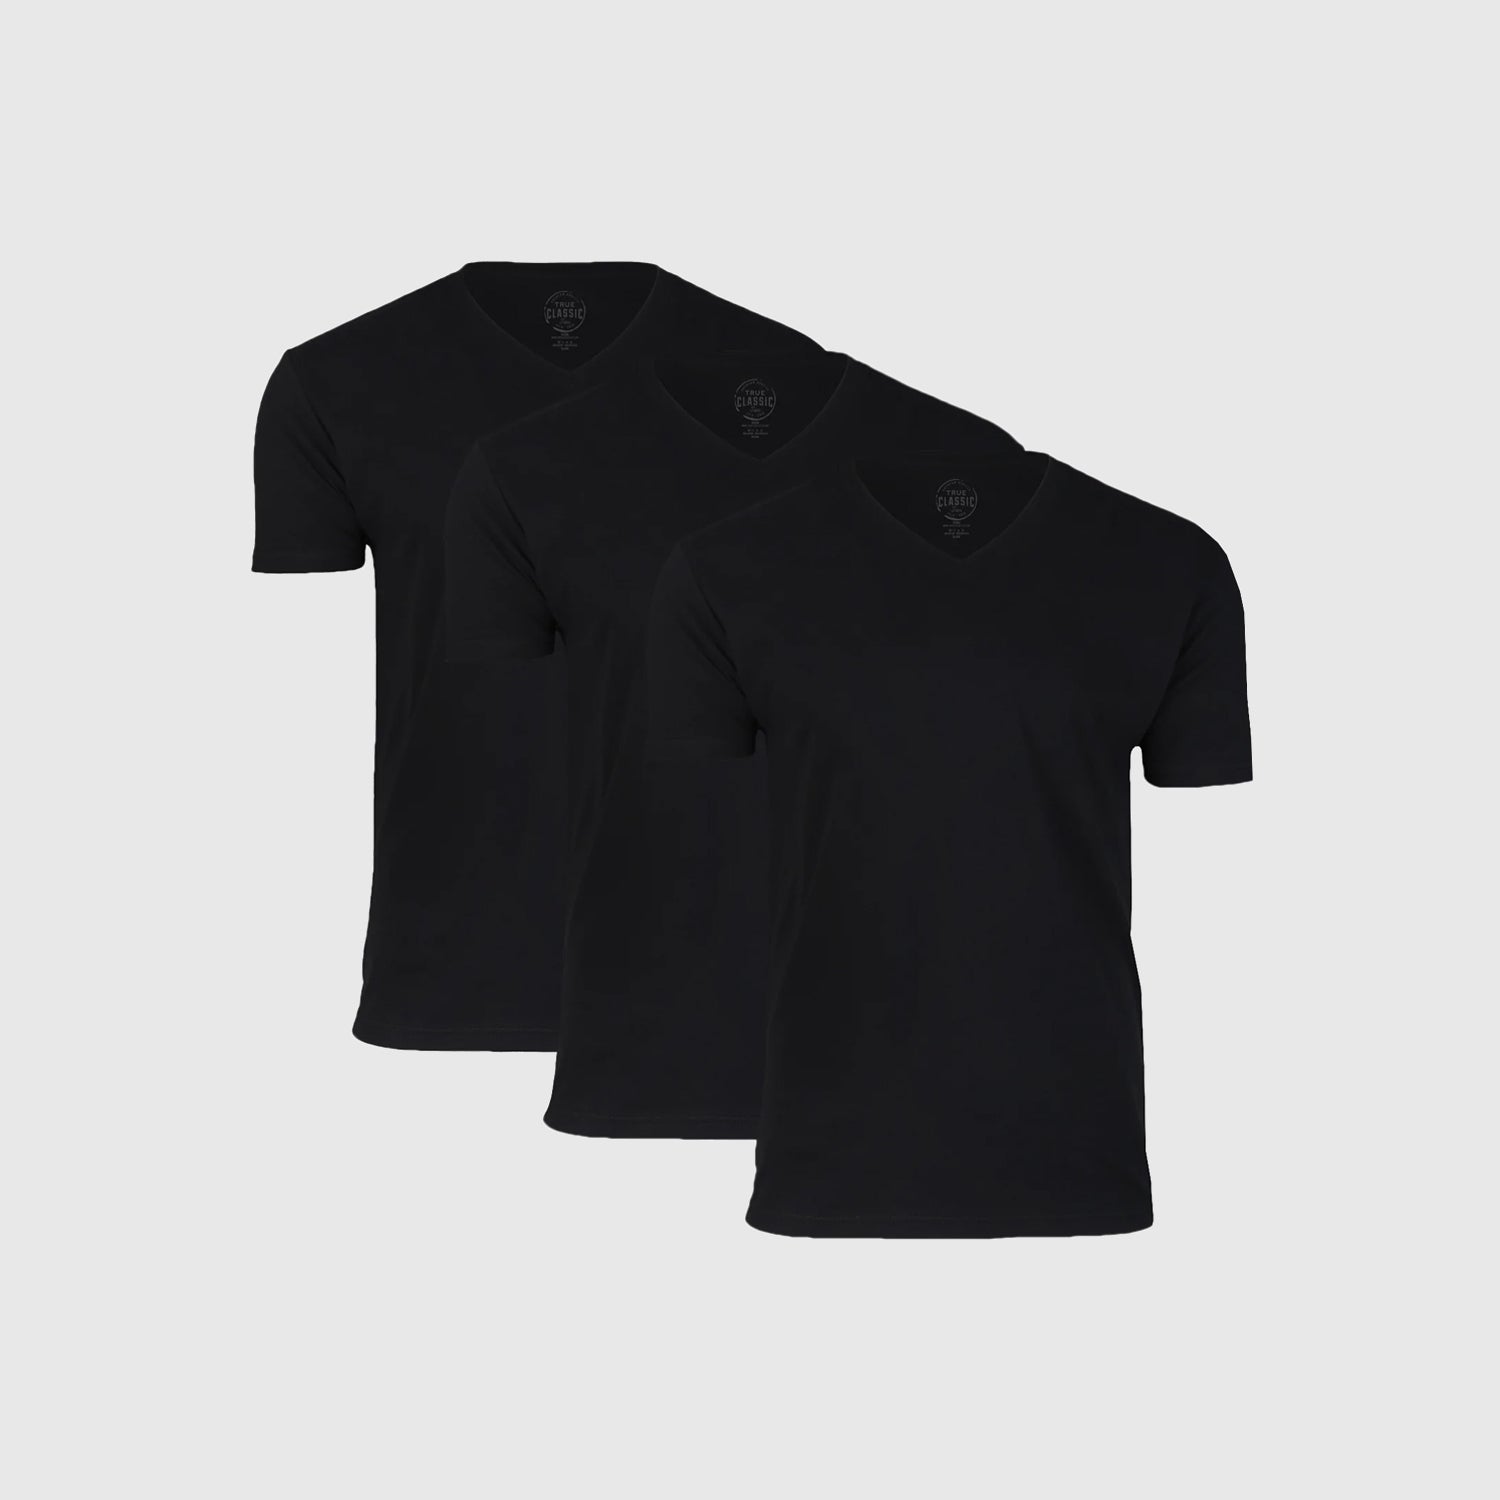 ENNOY 3PACK T-SHIRTS BLACK 胸ロゴ BbprG-m94817896956 - Tシャツ/カットソー(半袖/袖なし)